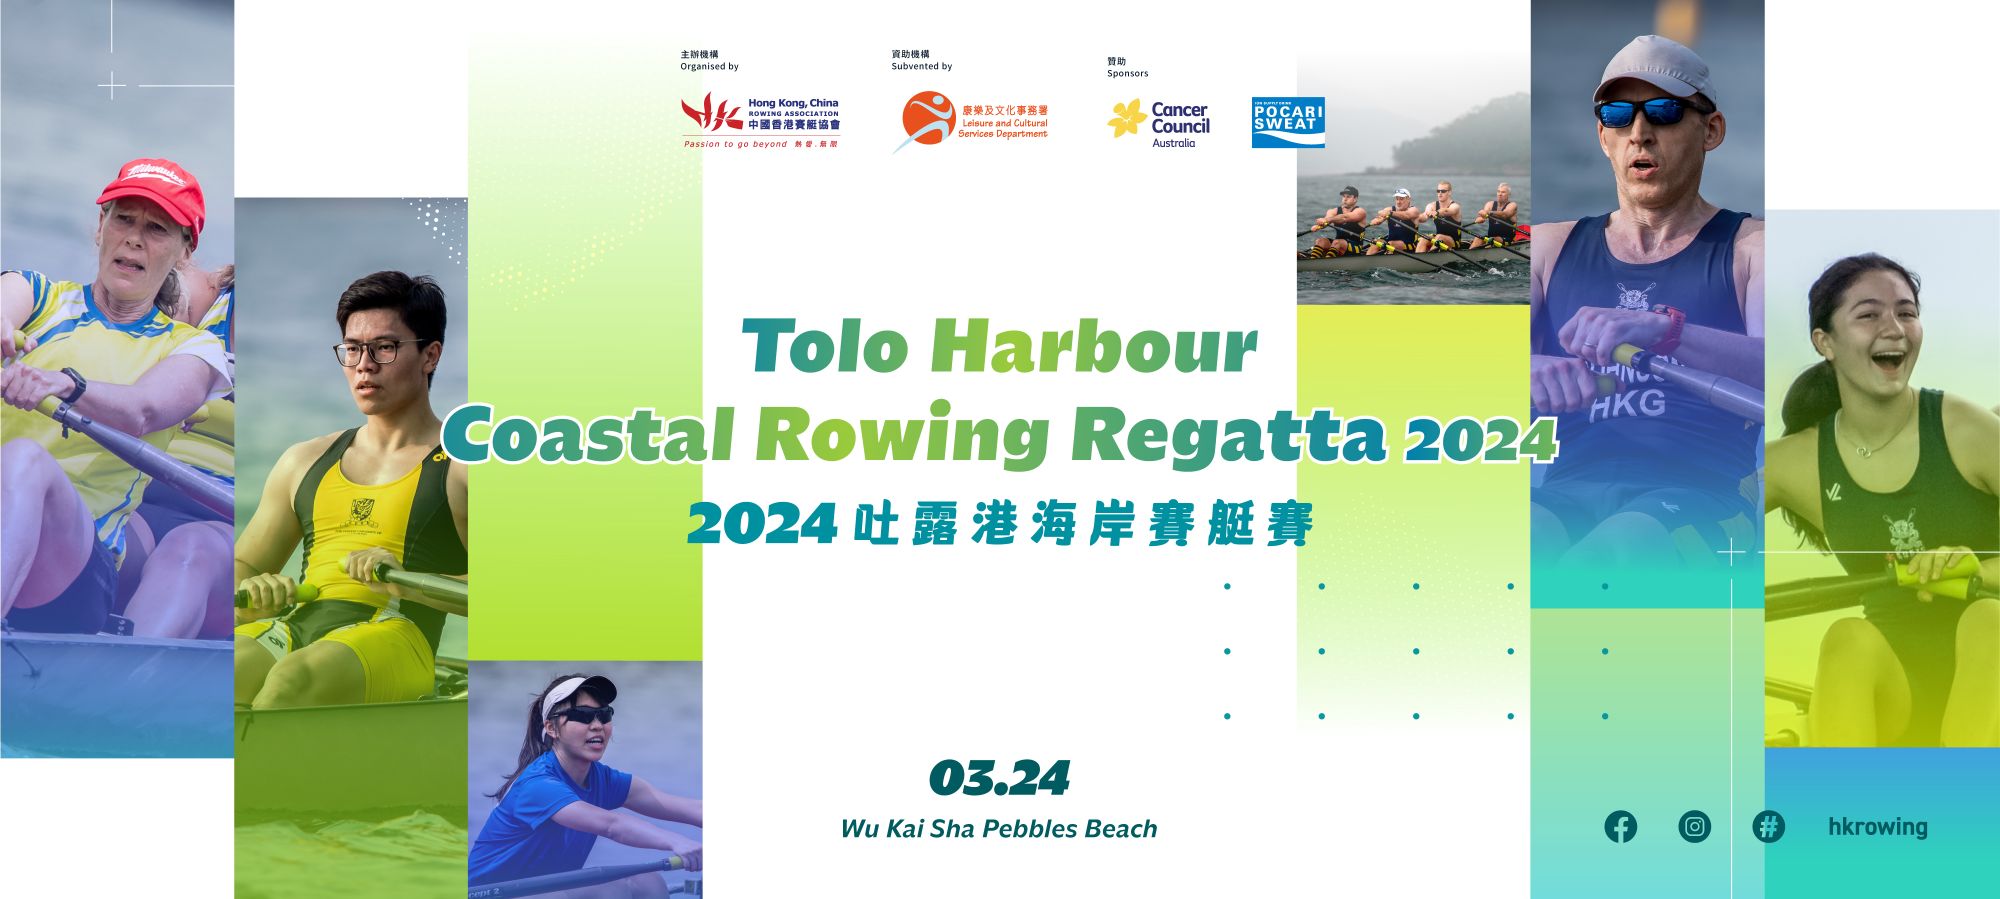 Tolo Harbour Coastal Rowing Regatta 2024 Overview